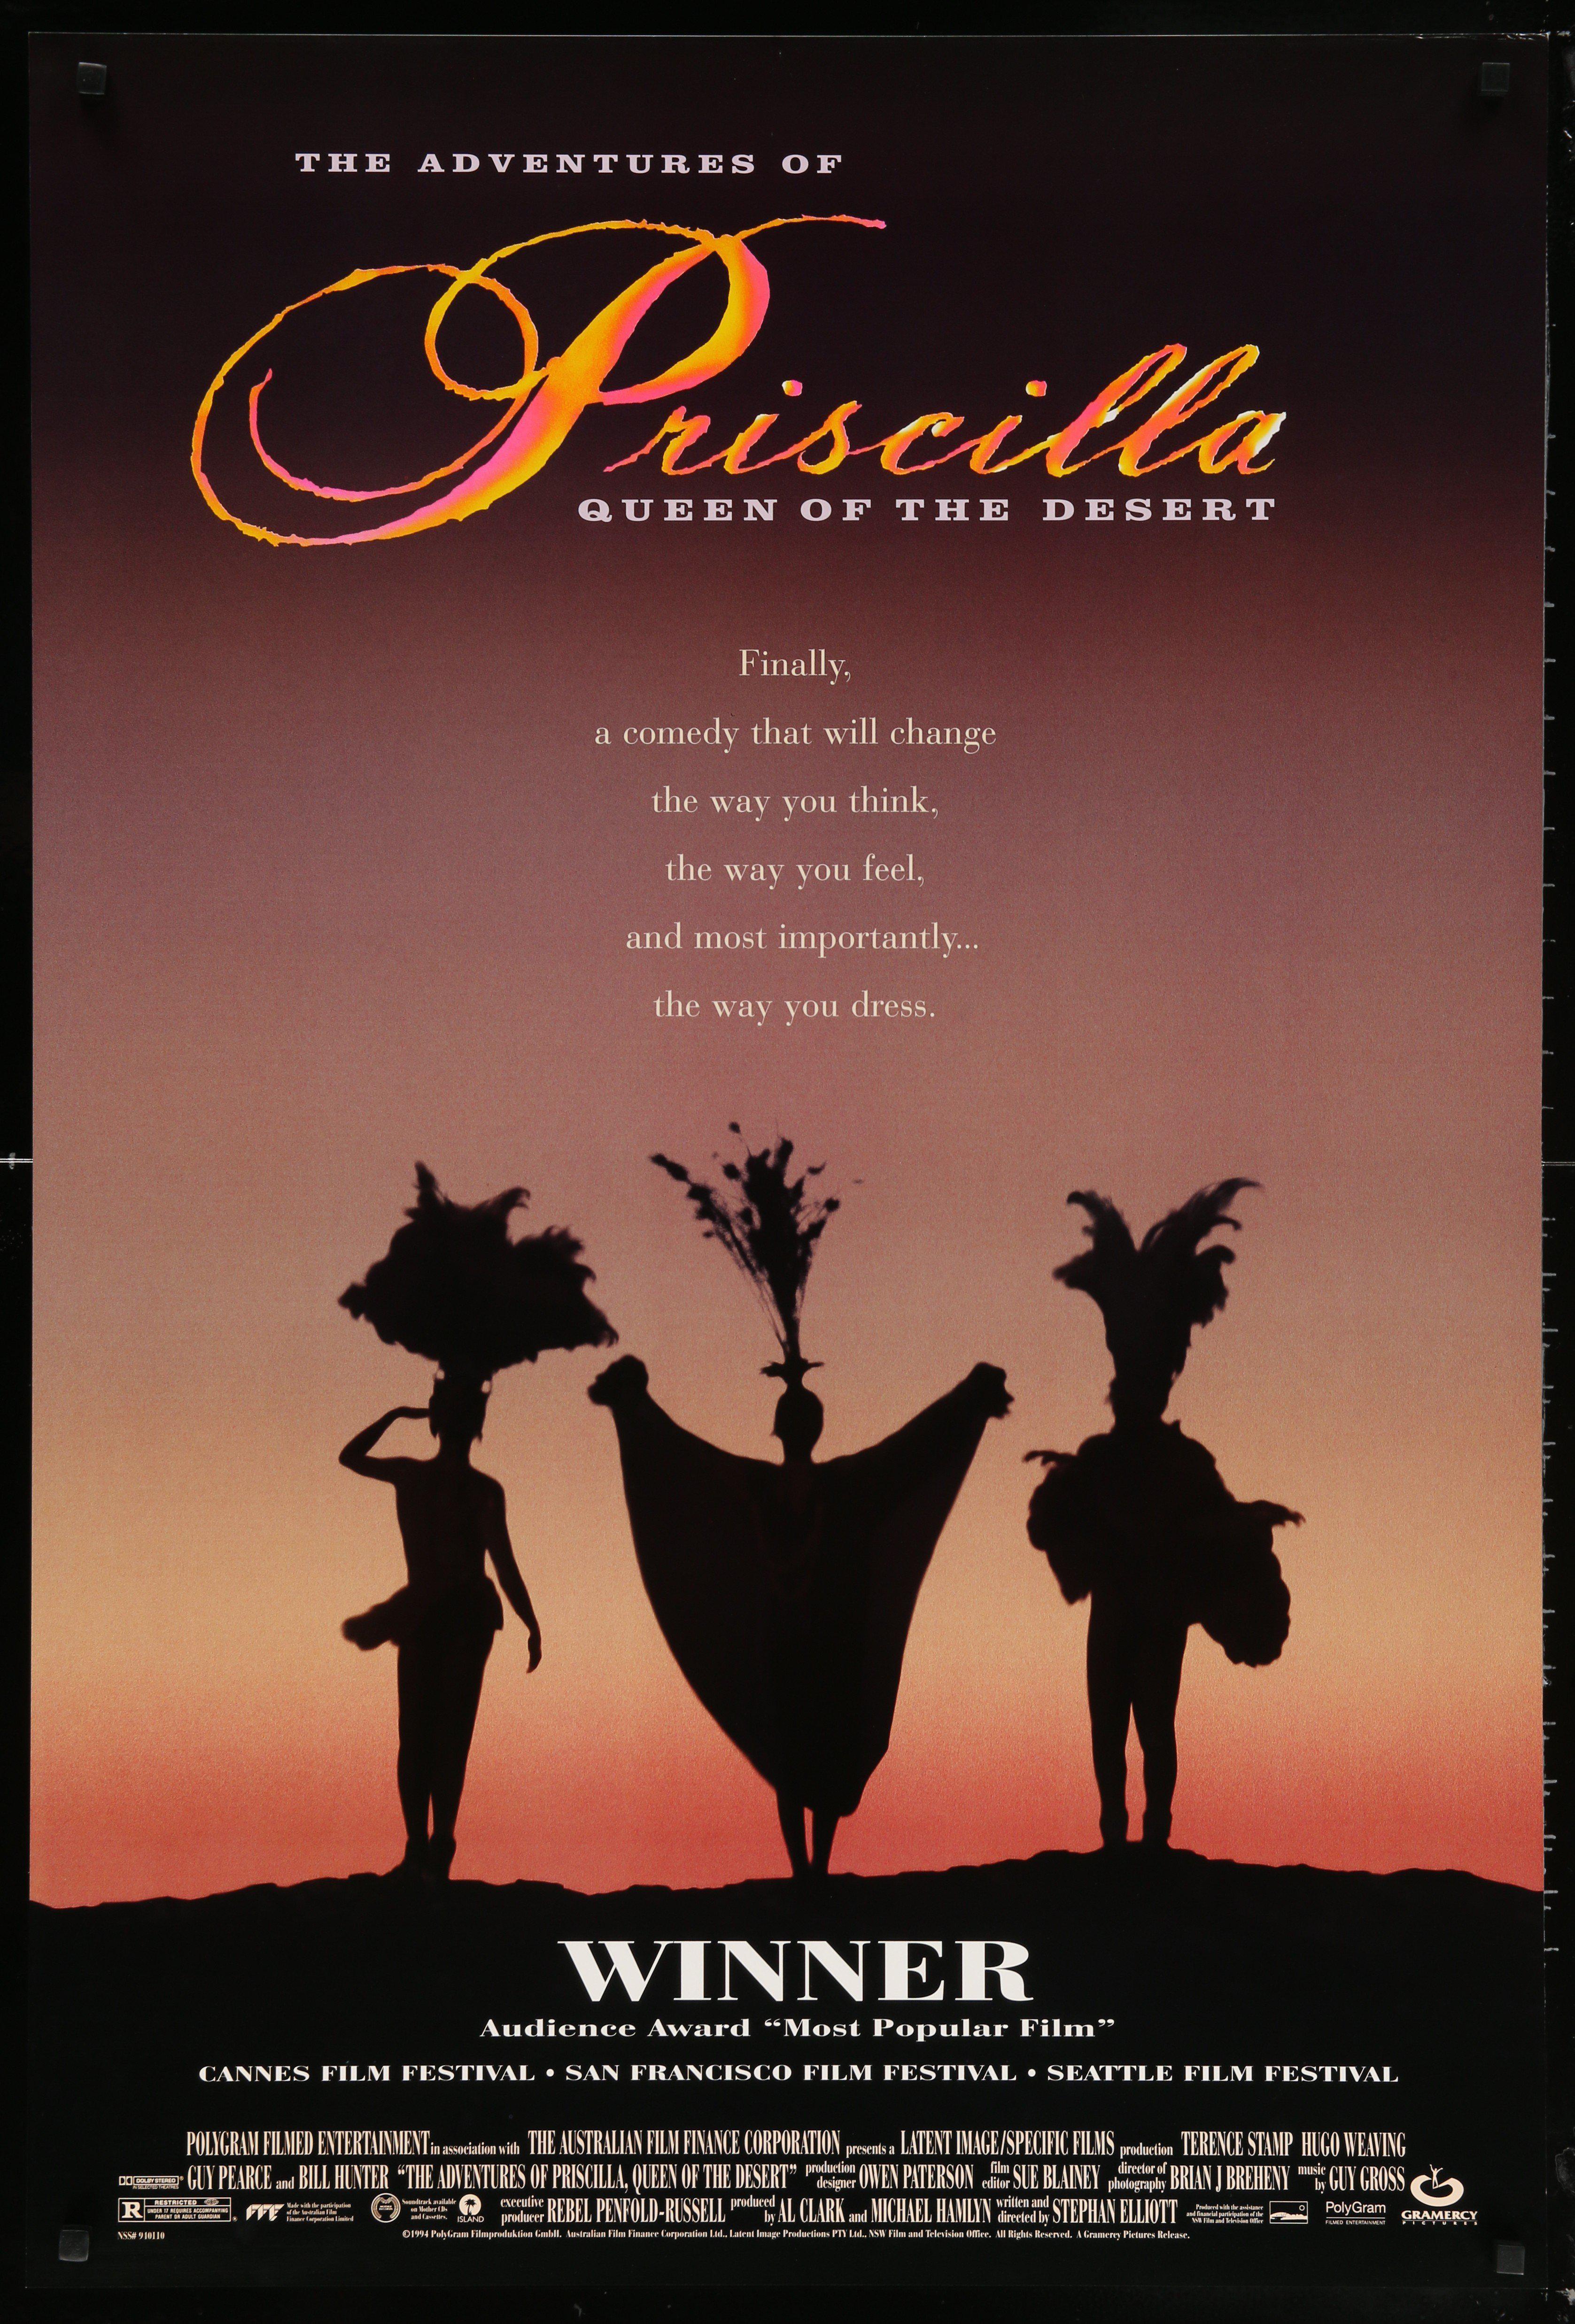 The Adventures of Priscilla, Queen of the Desert collection